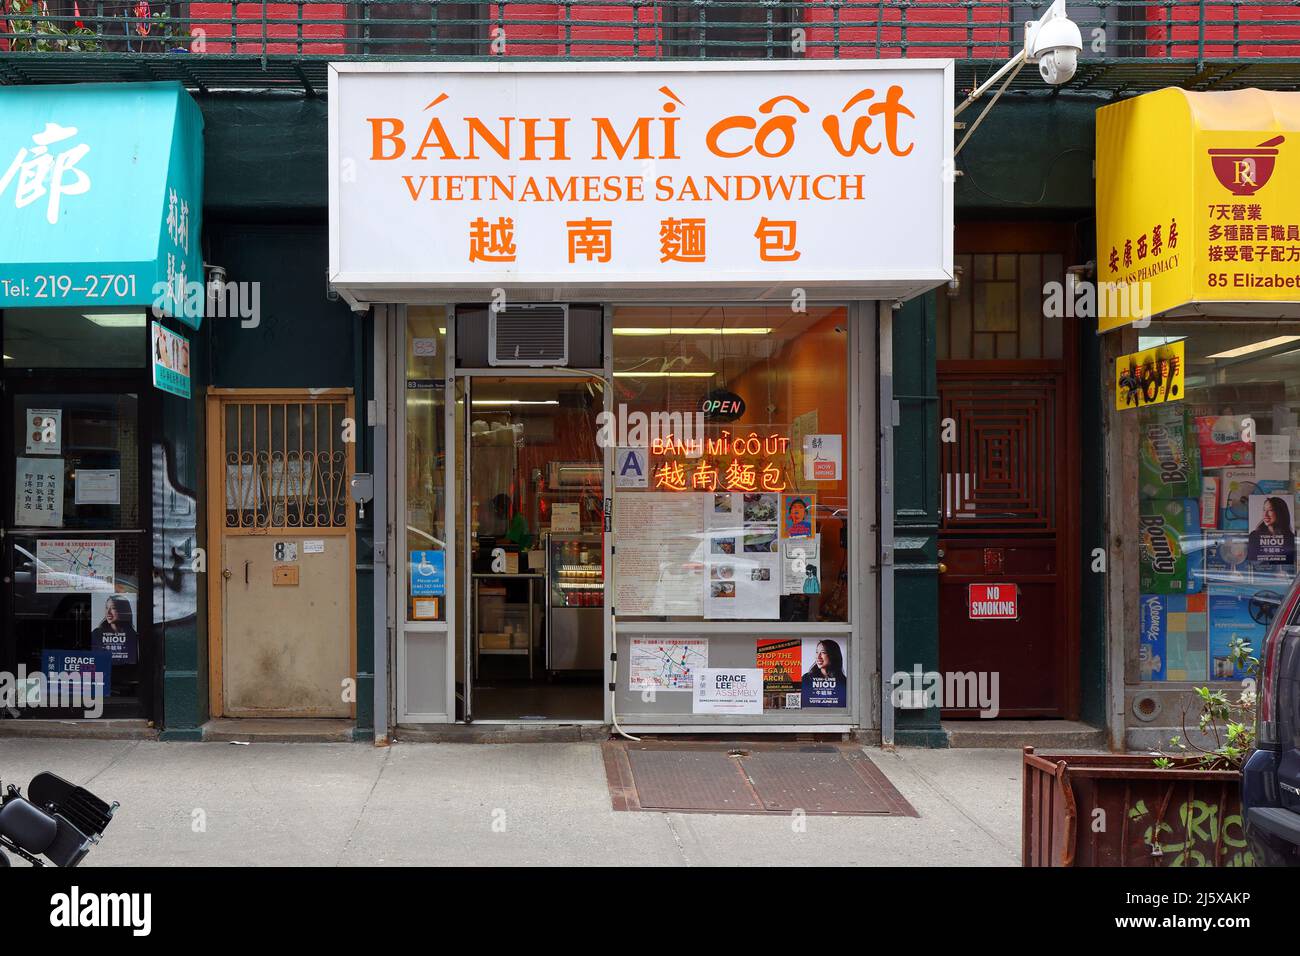 Banh Mi Co Ut, 83 Elizabeth St, New York, NYC storefront photo of a Vietnamese sandwich shop in Manhattan Chinatown. Bánh Mì Cô Út Stock Photo